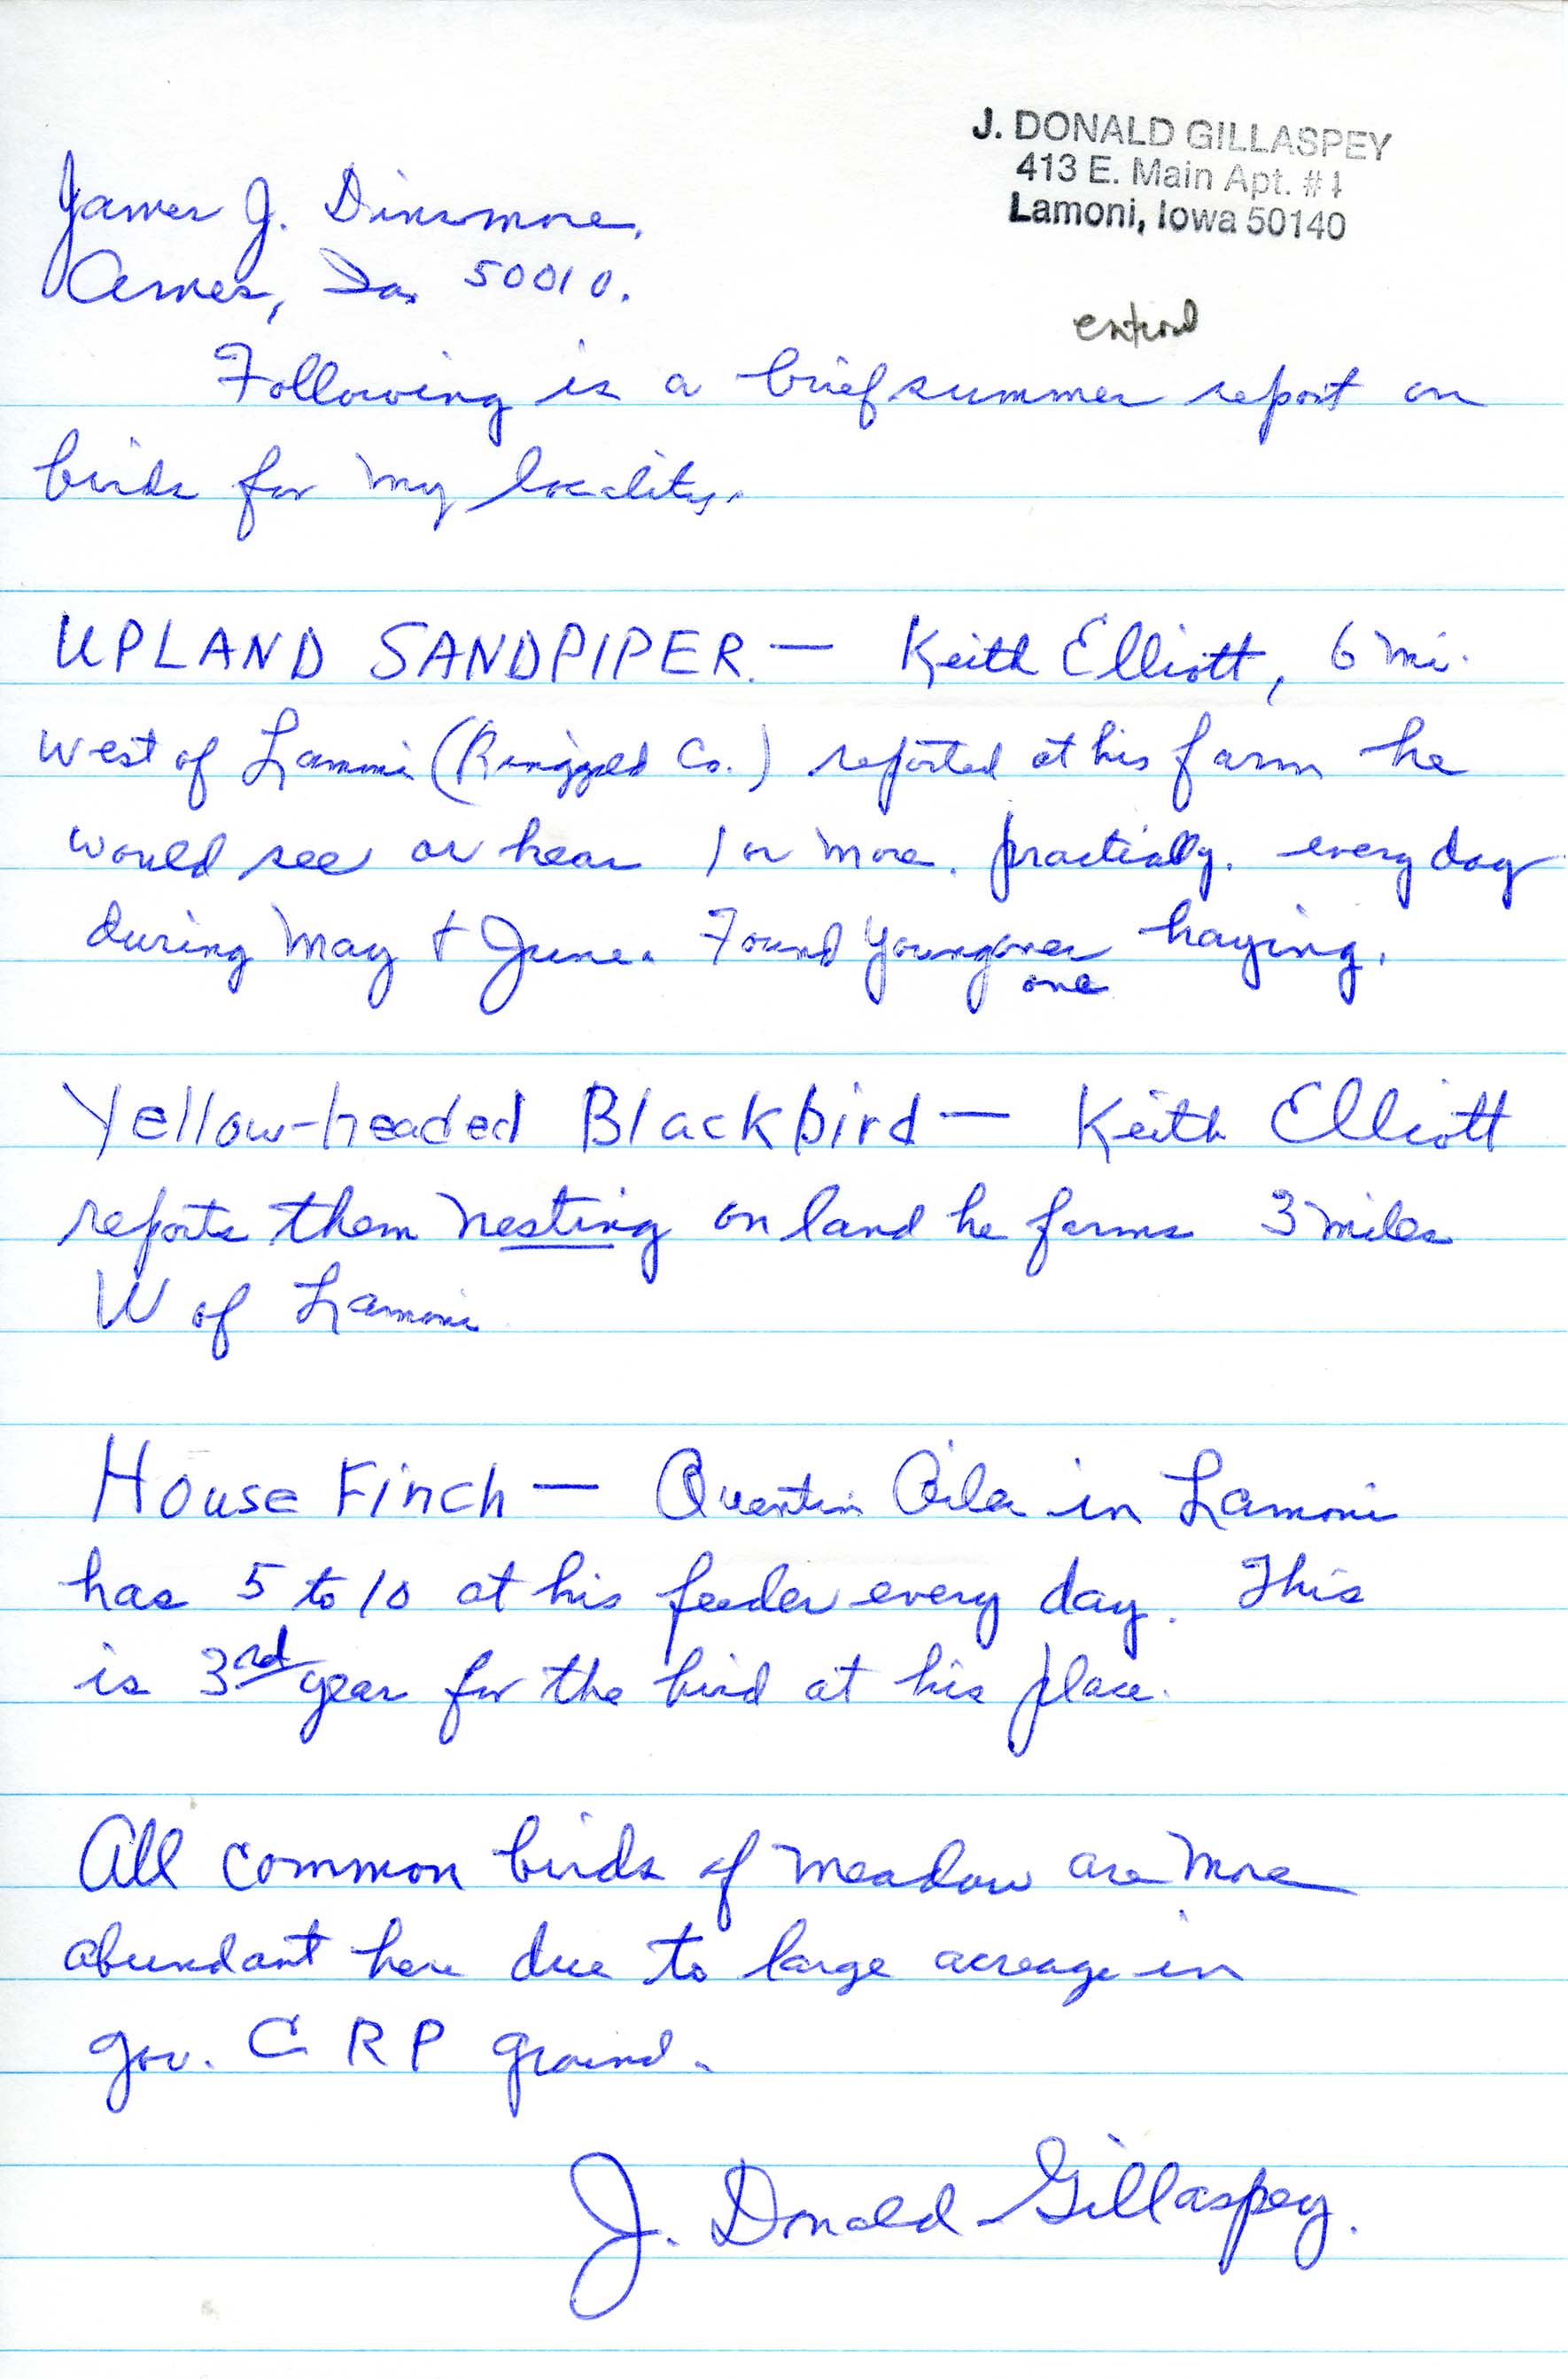 J. Donald Gillaspey letter to James Dinsmore regarding bird sightings in Lamoni, IA, 1990 